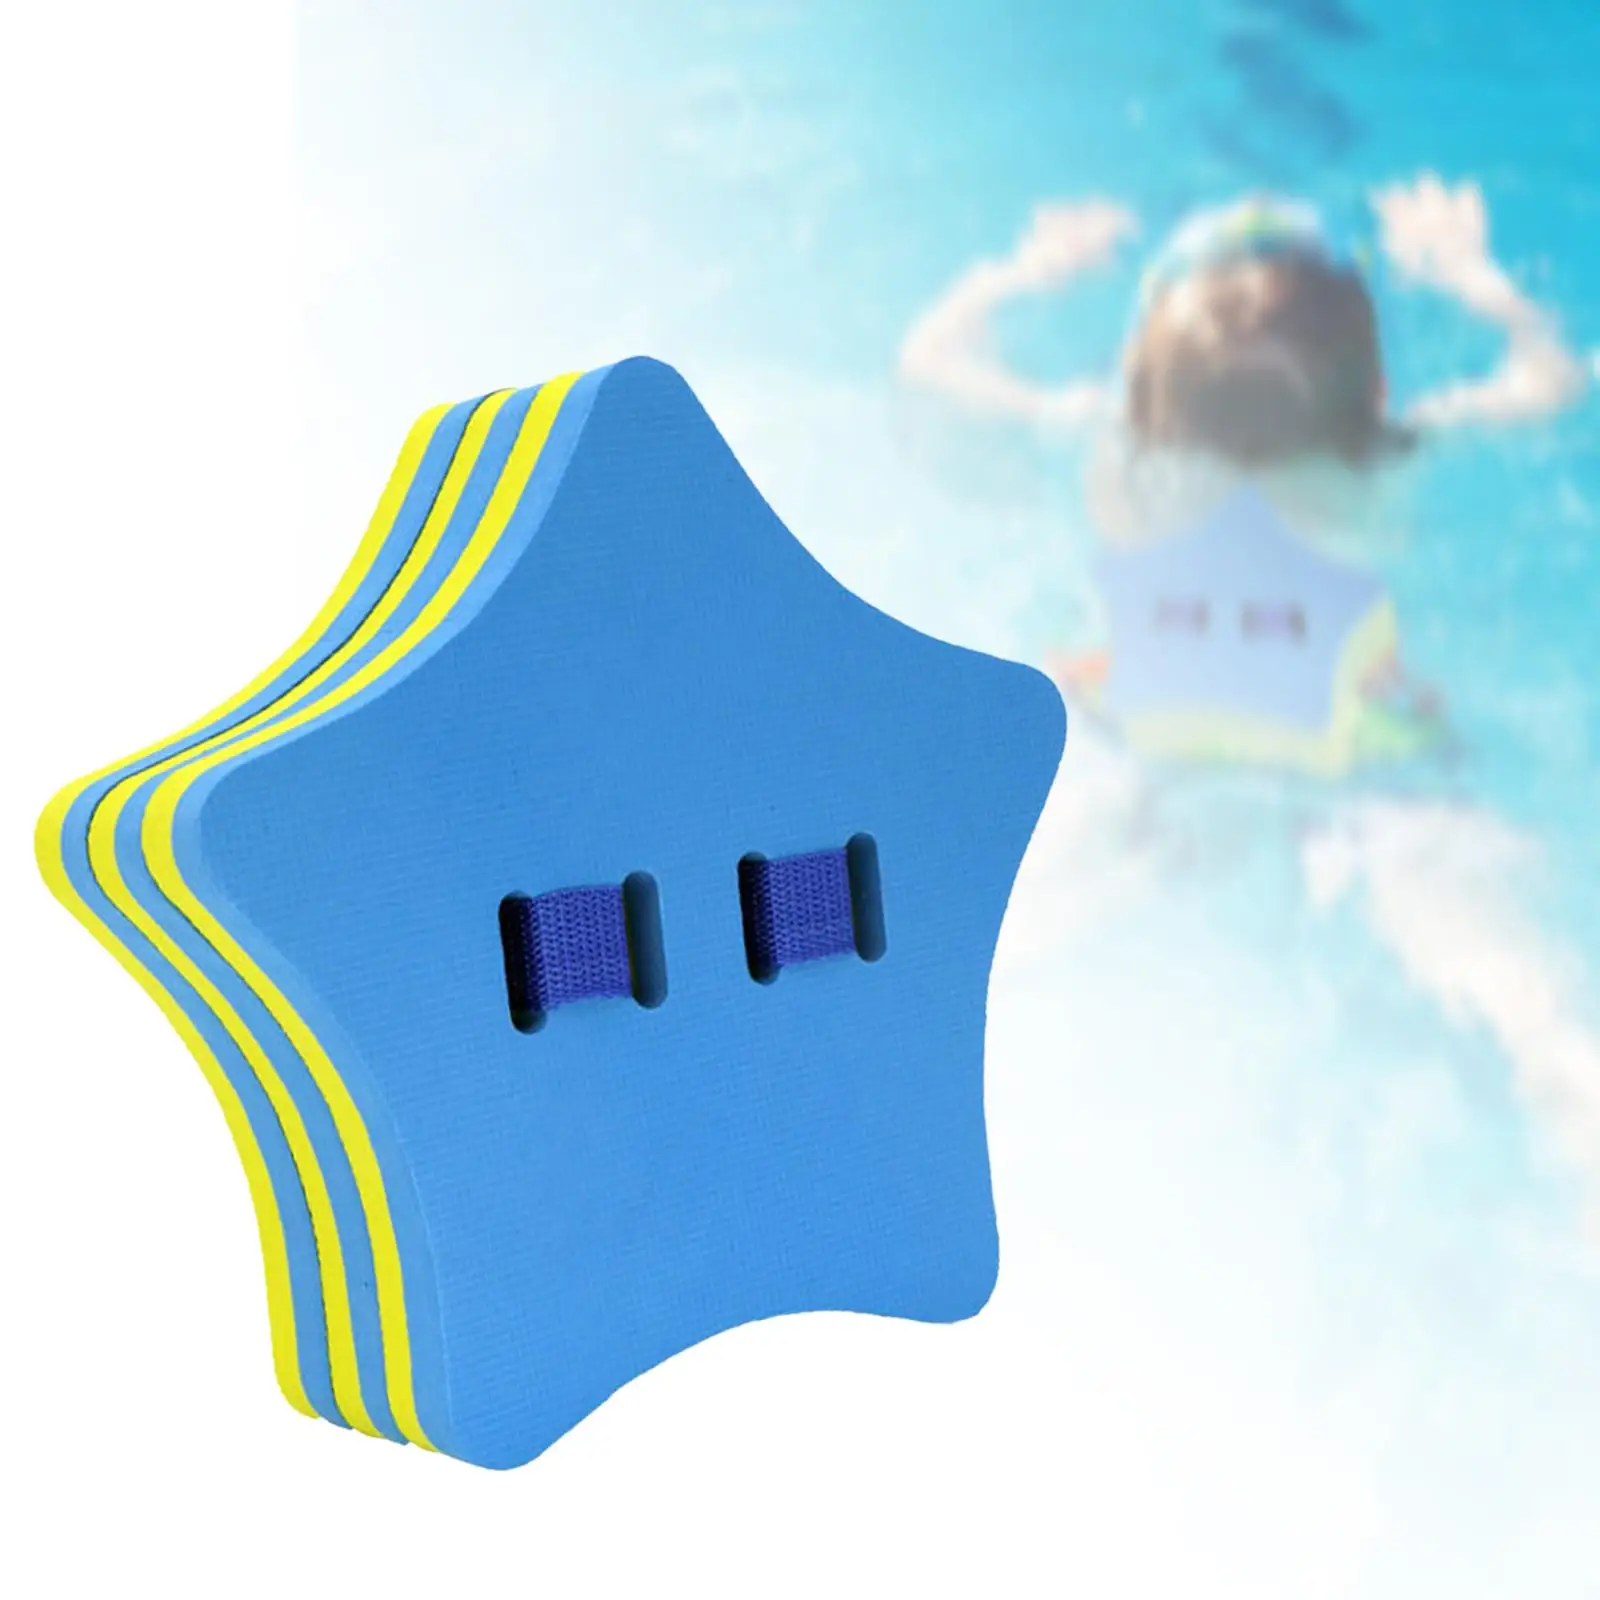 Adjustable Back foam floating Belt Waist Swimming Aid with Split Layers Swim Kickboard Star Shaped for Swimmers Summer